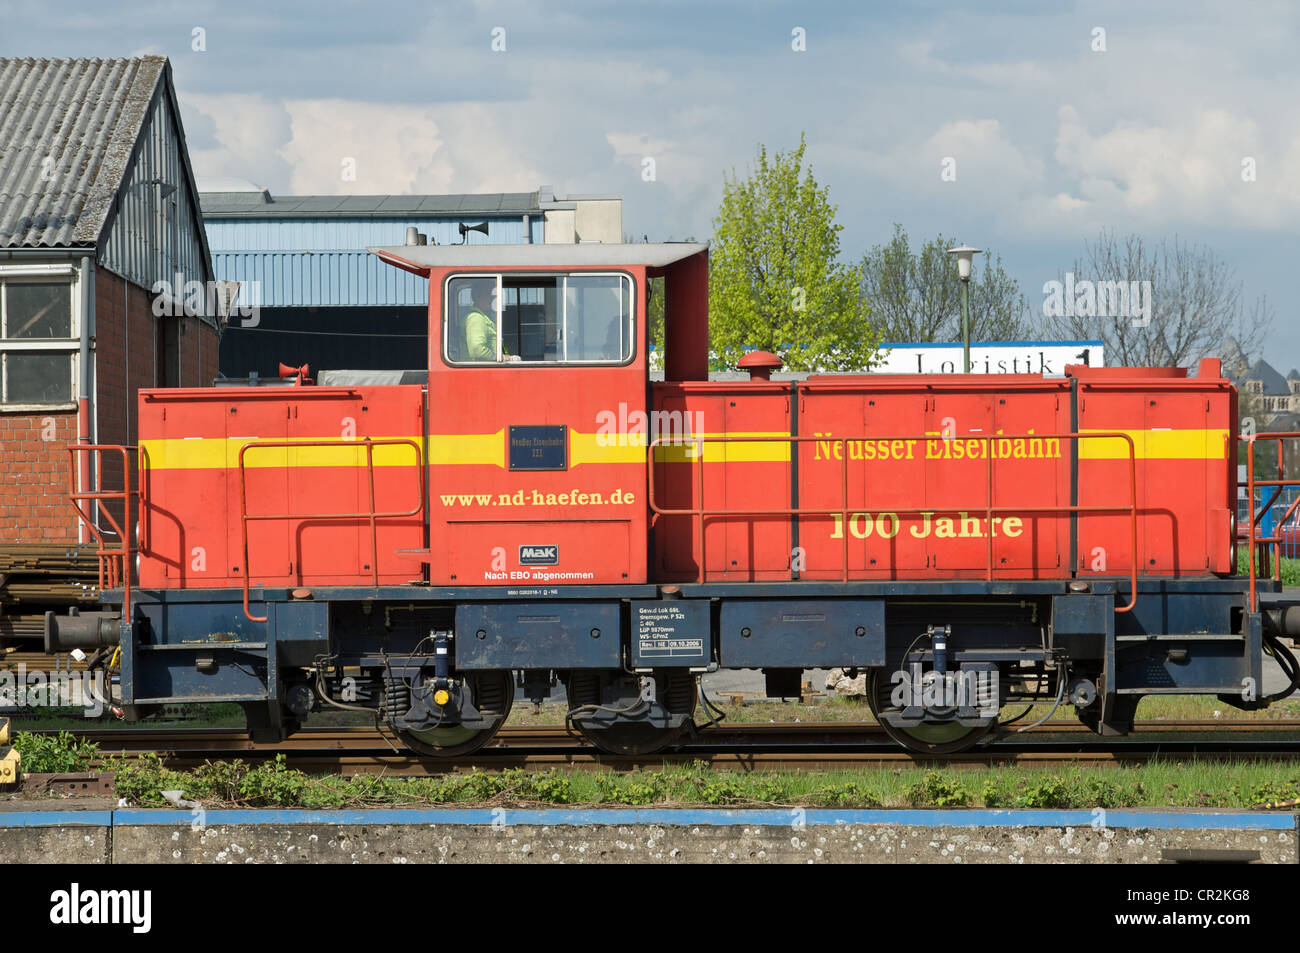 Mak diesel shunter locomotive displaying 100 years of Neusser Eisenbahn, Dusseldorf Germany Stock Photo